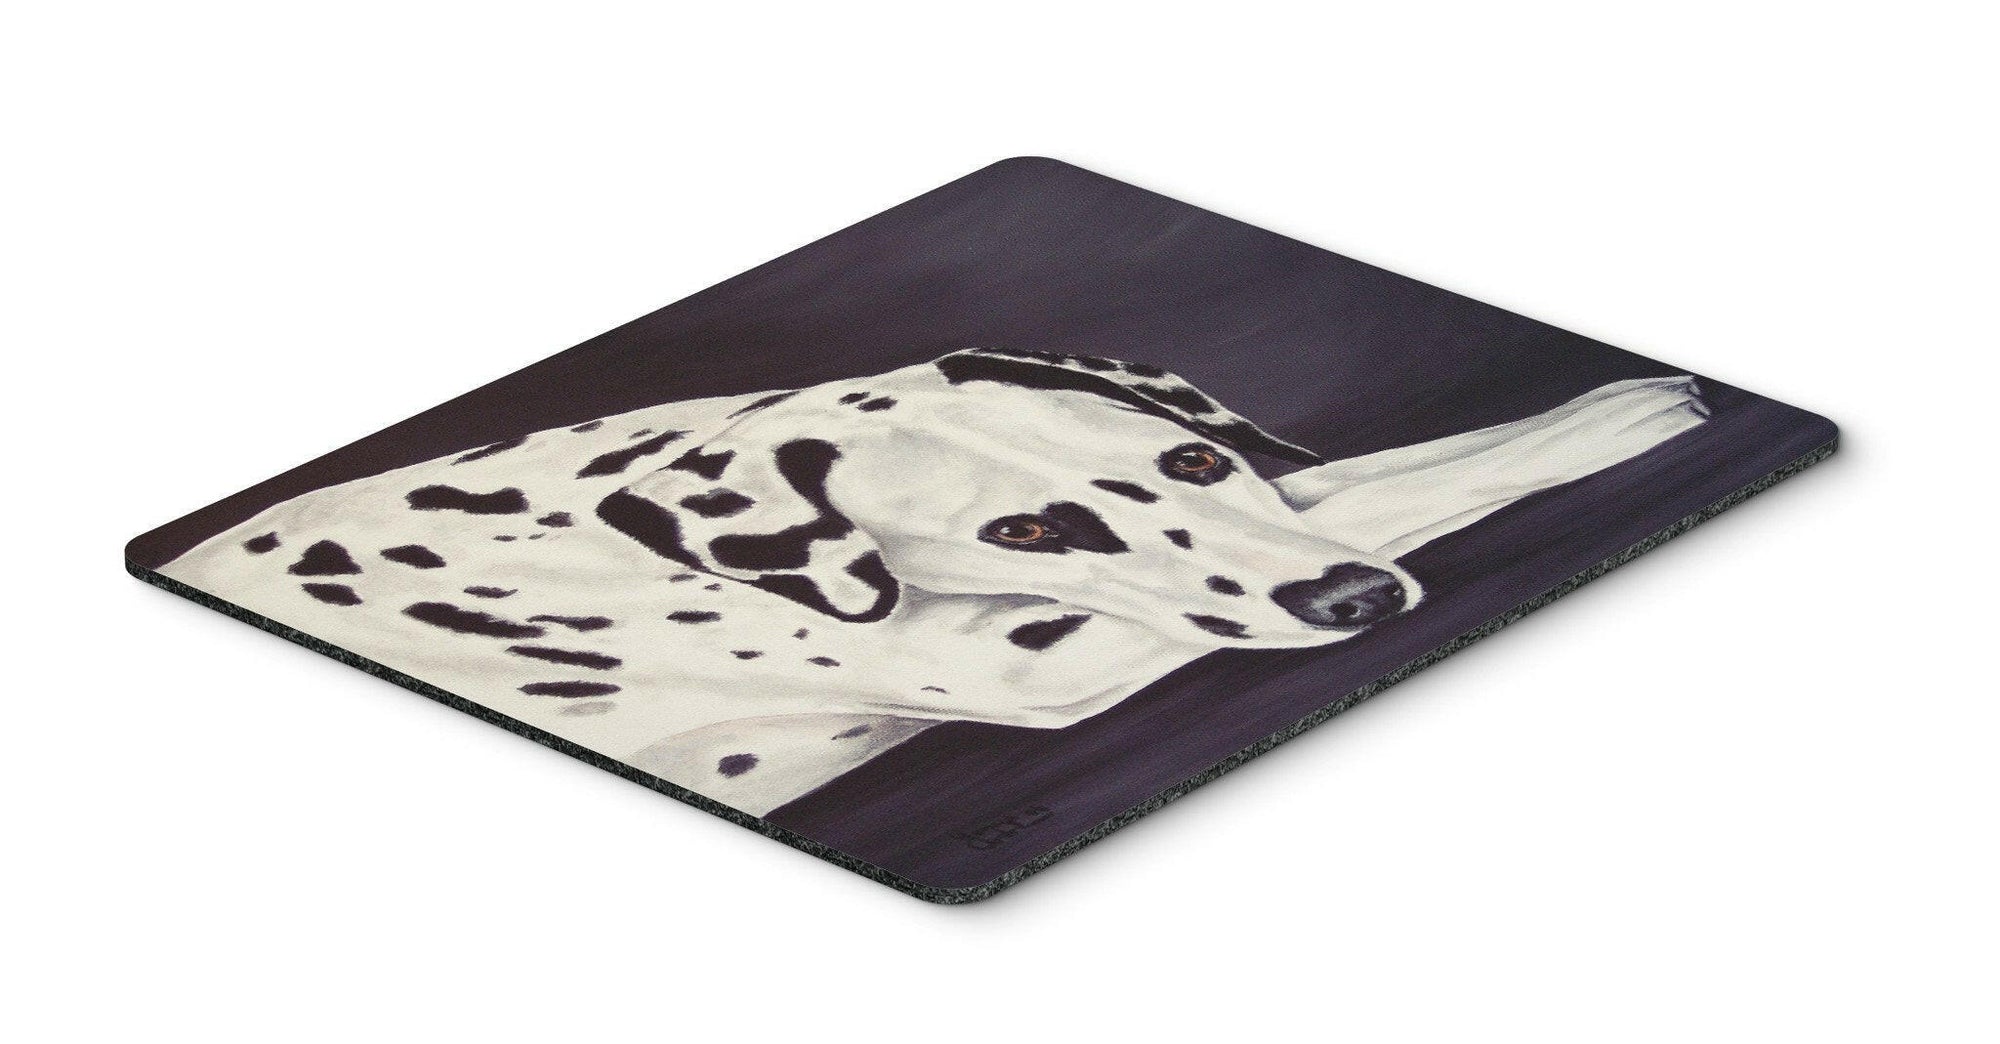 Dal Dalmatian Mouse Pad, Hot Pad or Trivet AMB1193MP by Caroline's Treasures